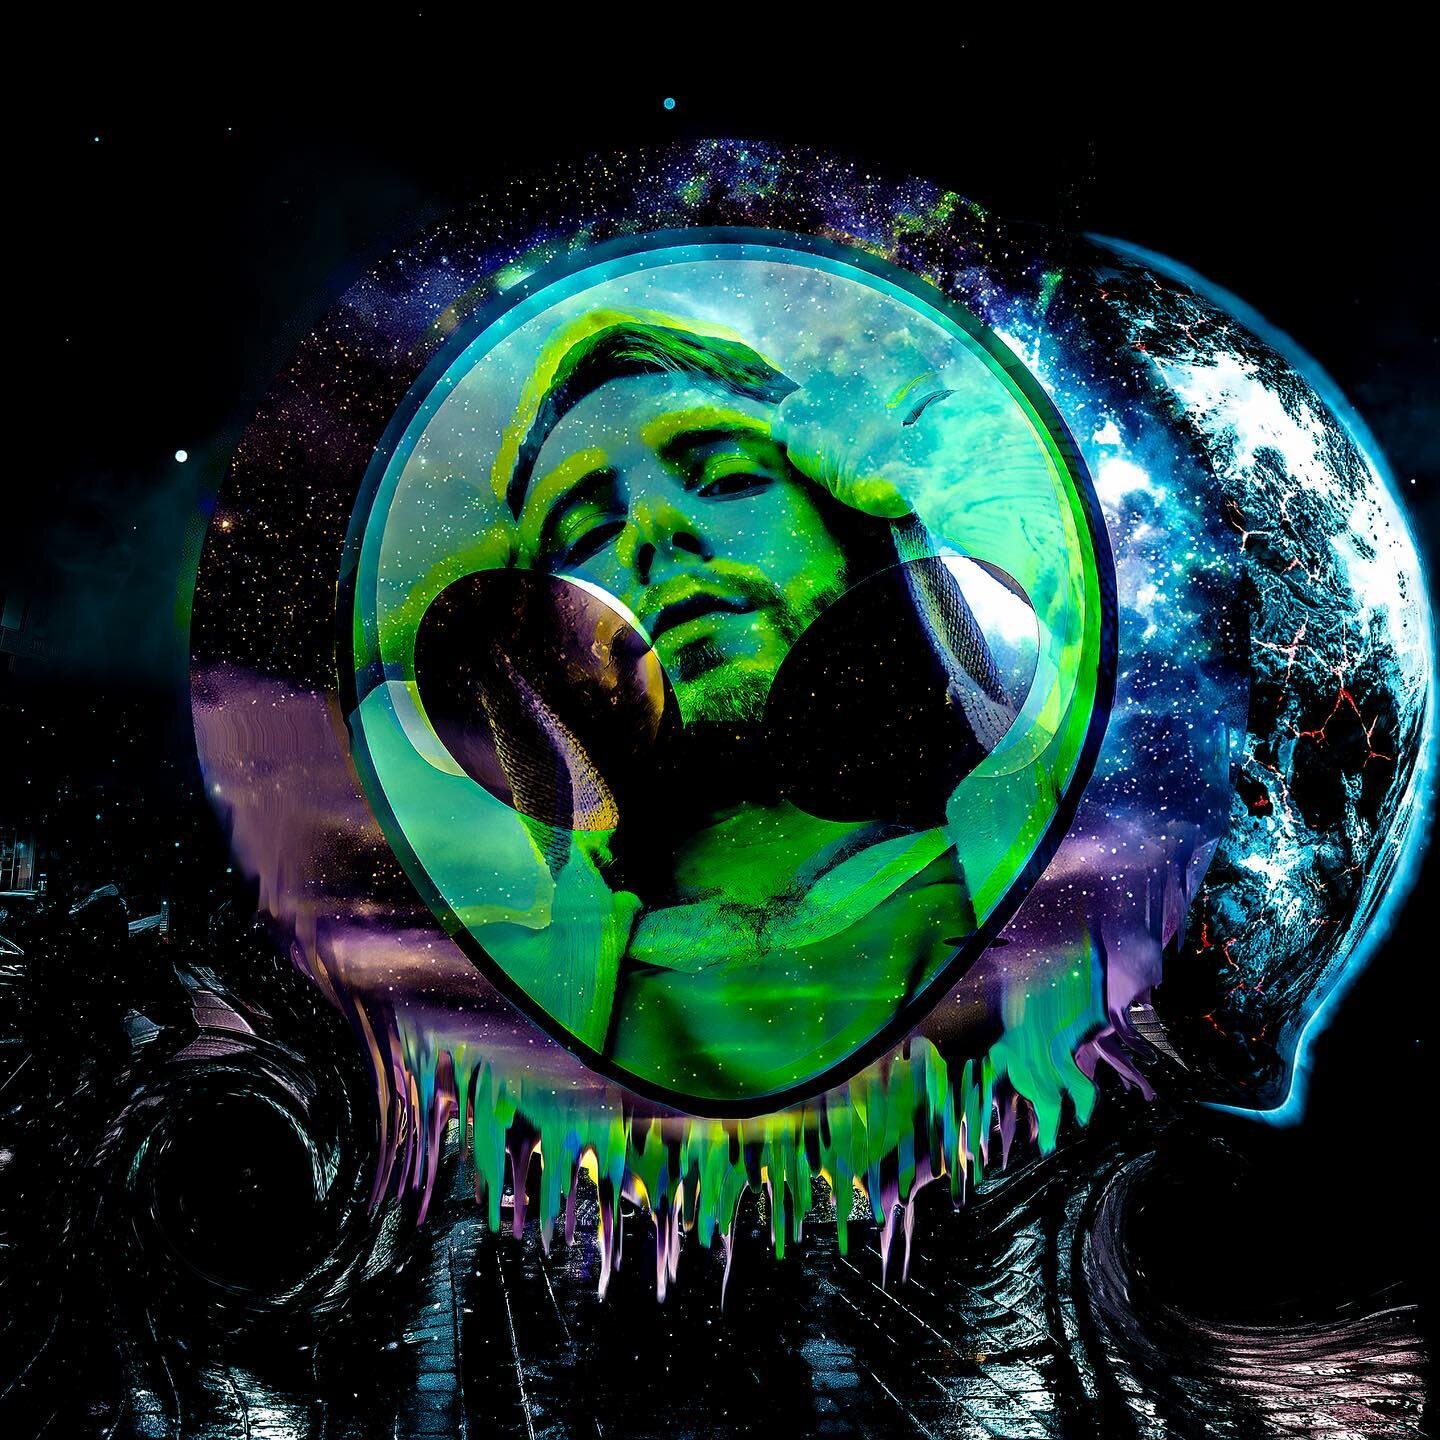 I feel like an alien 👽

🛸
Been Thru (Alien Remixx)
Production by @boyacuff 
Design by @nithzia